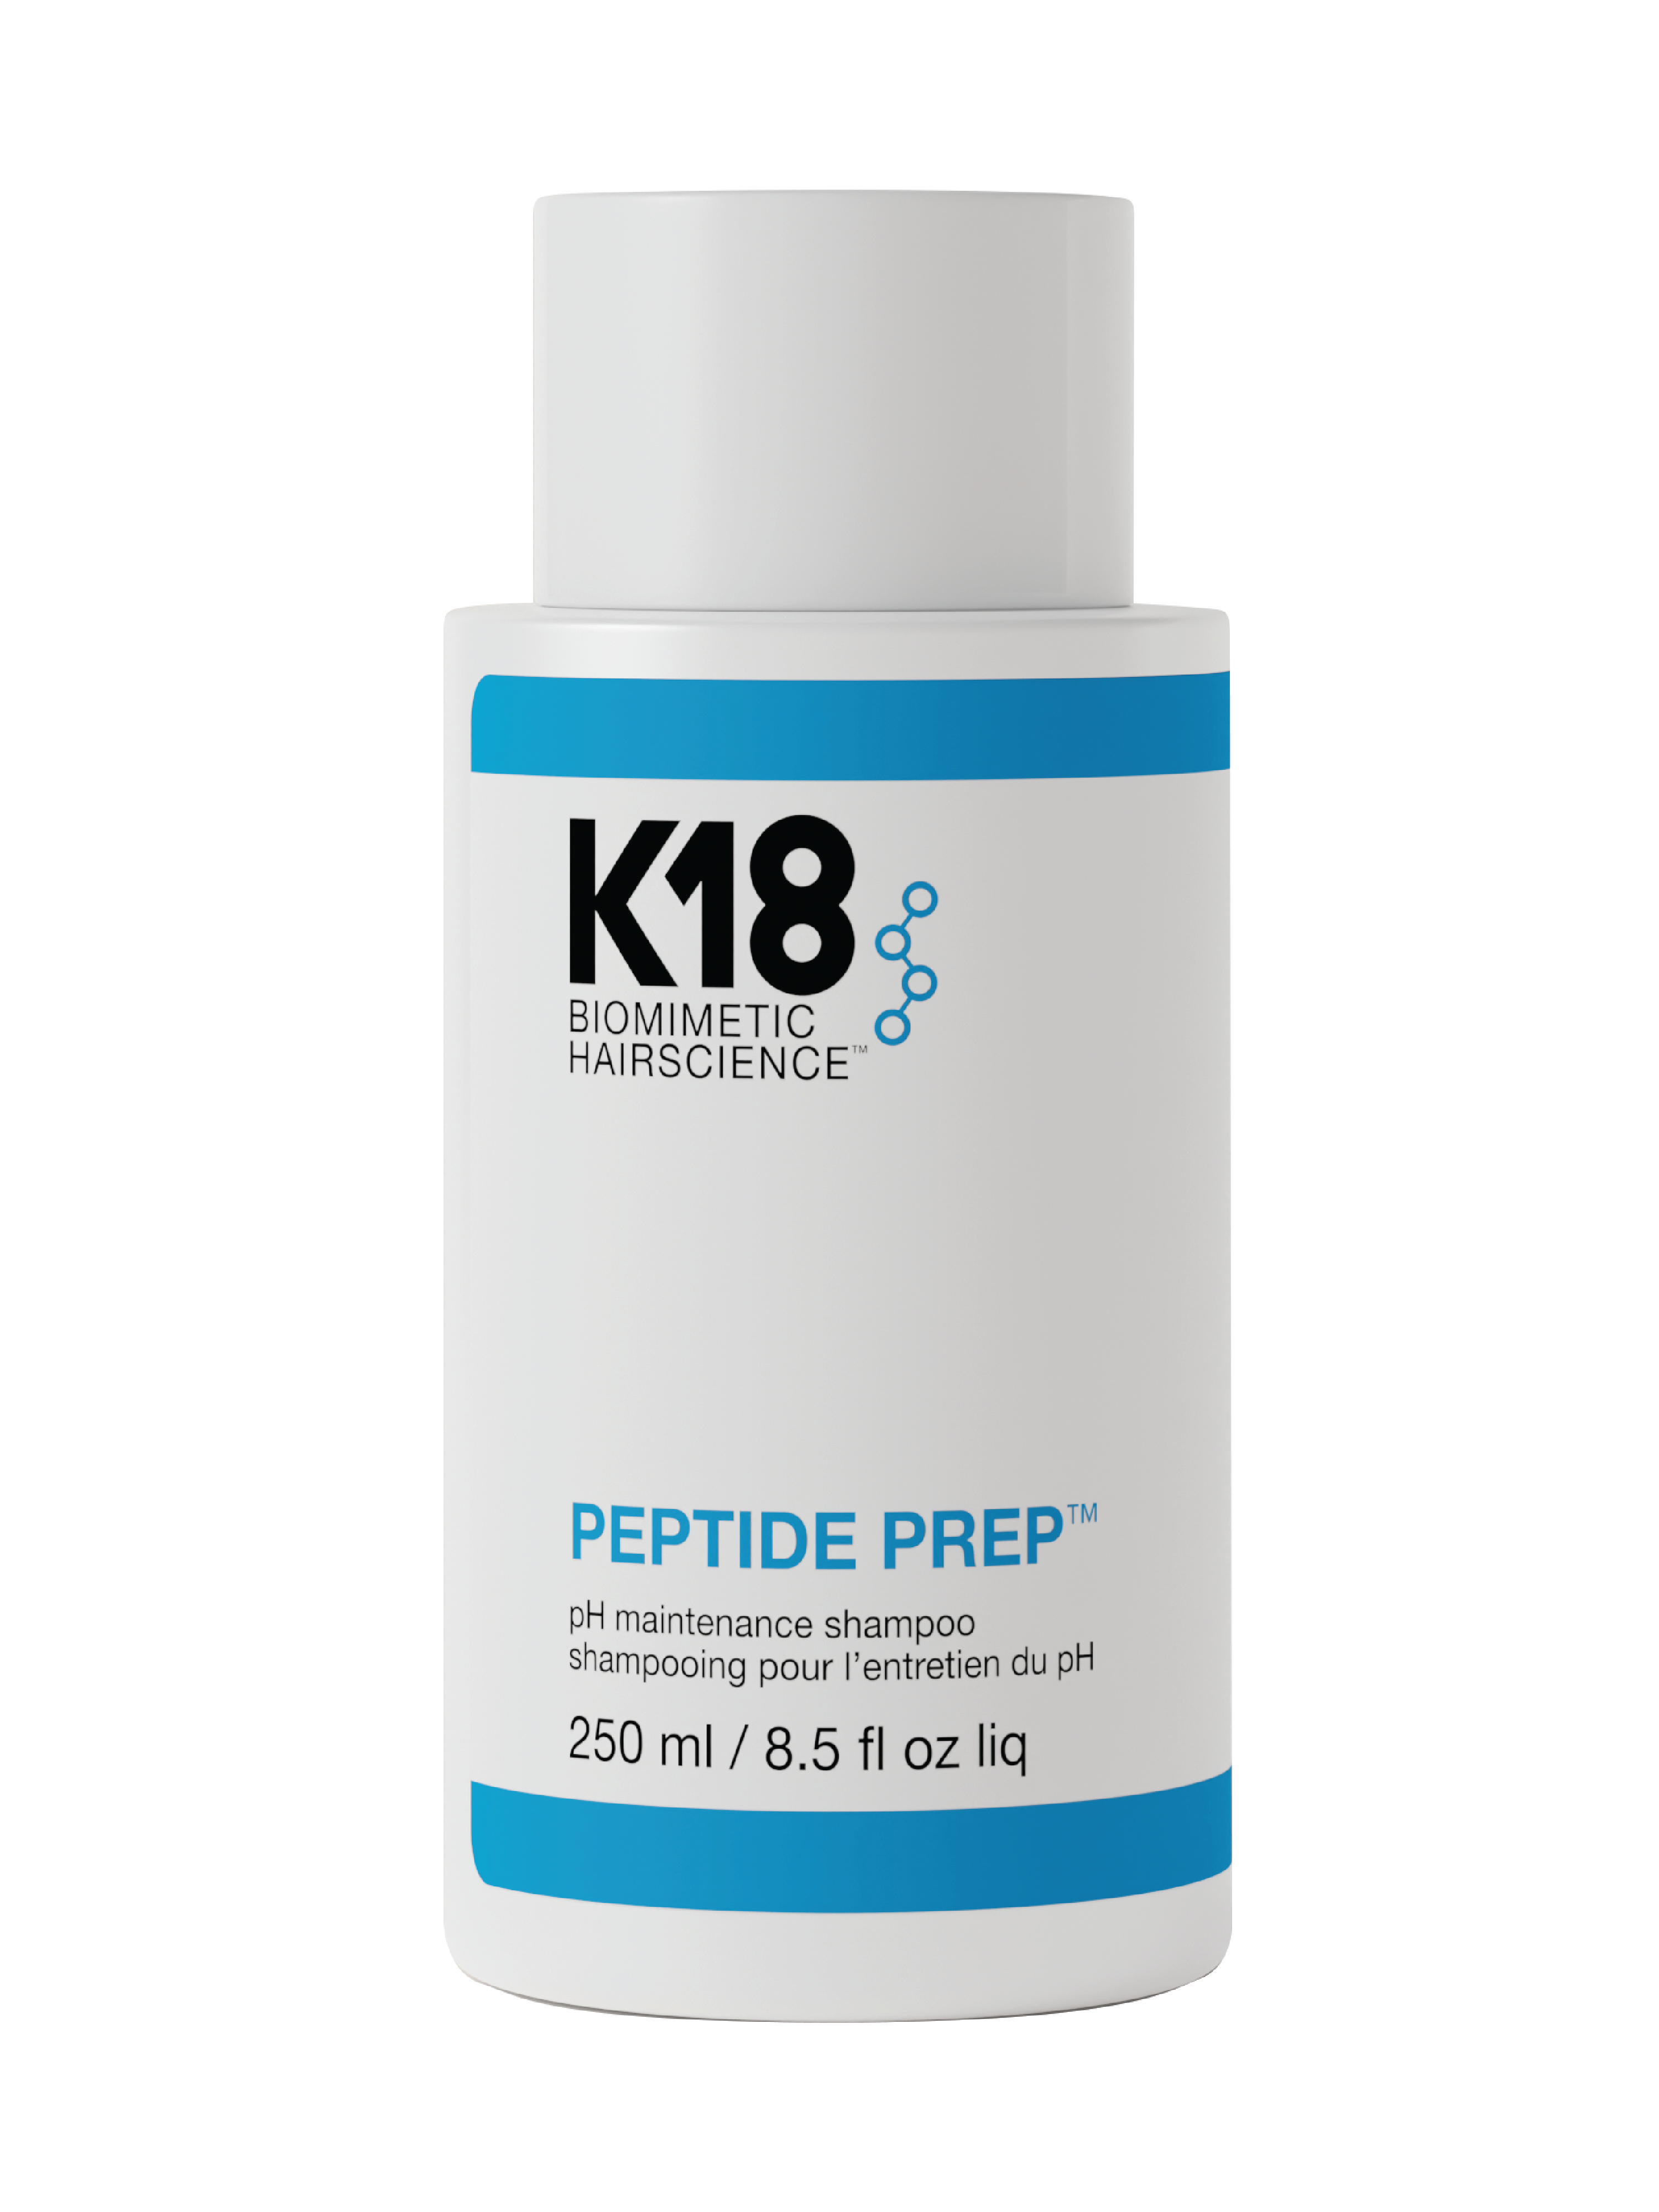 K18 Peptide Prep pH Maintenance Shampoo, 250 ml